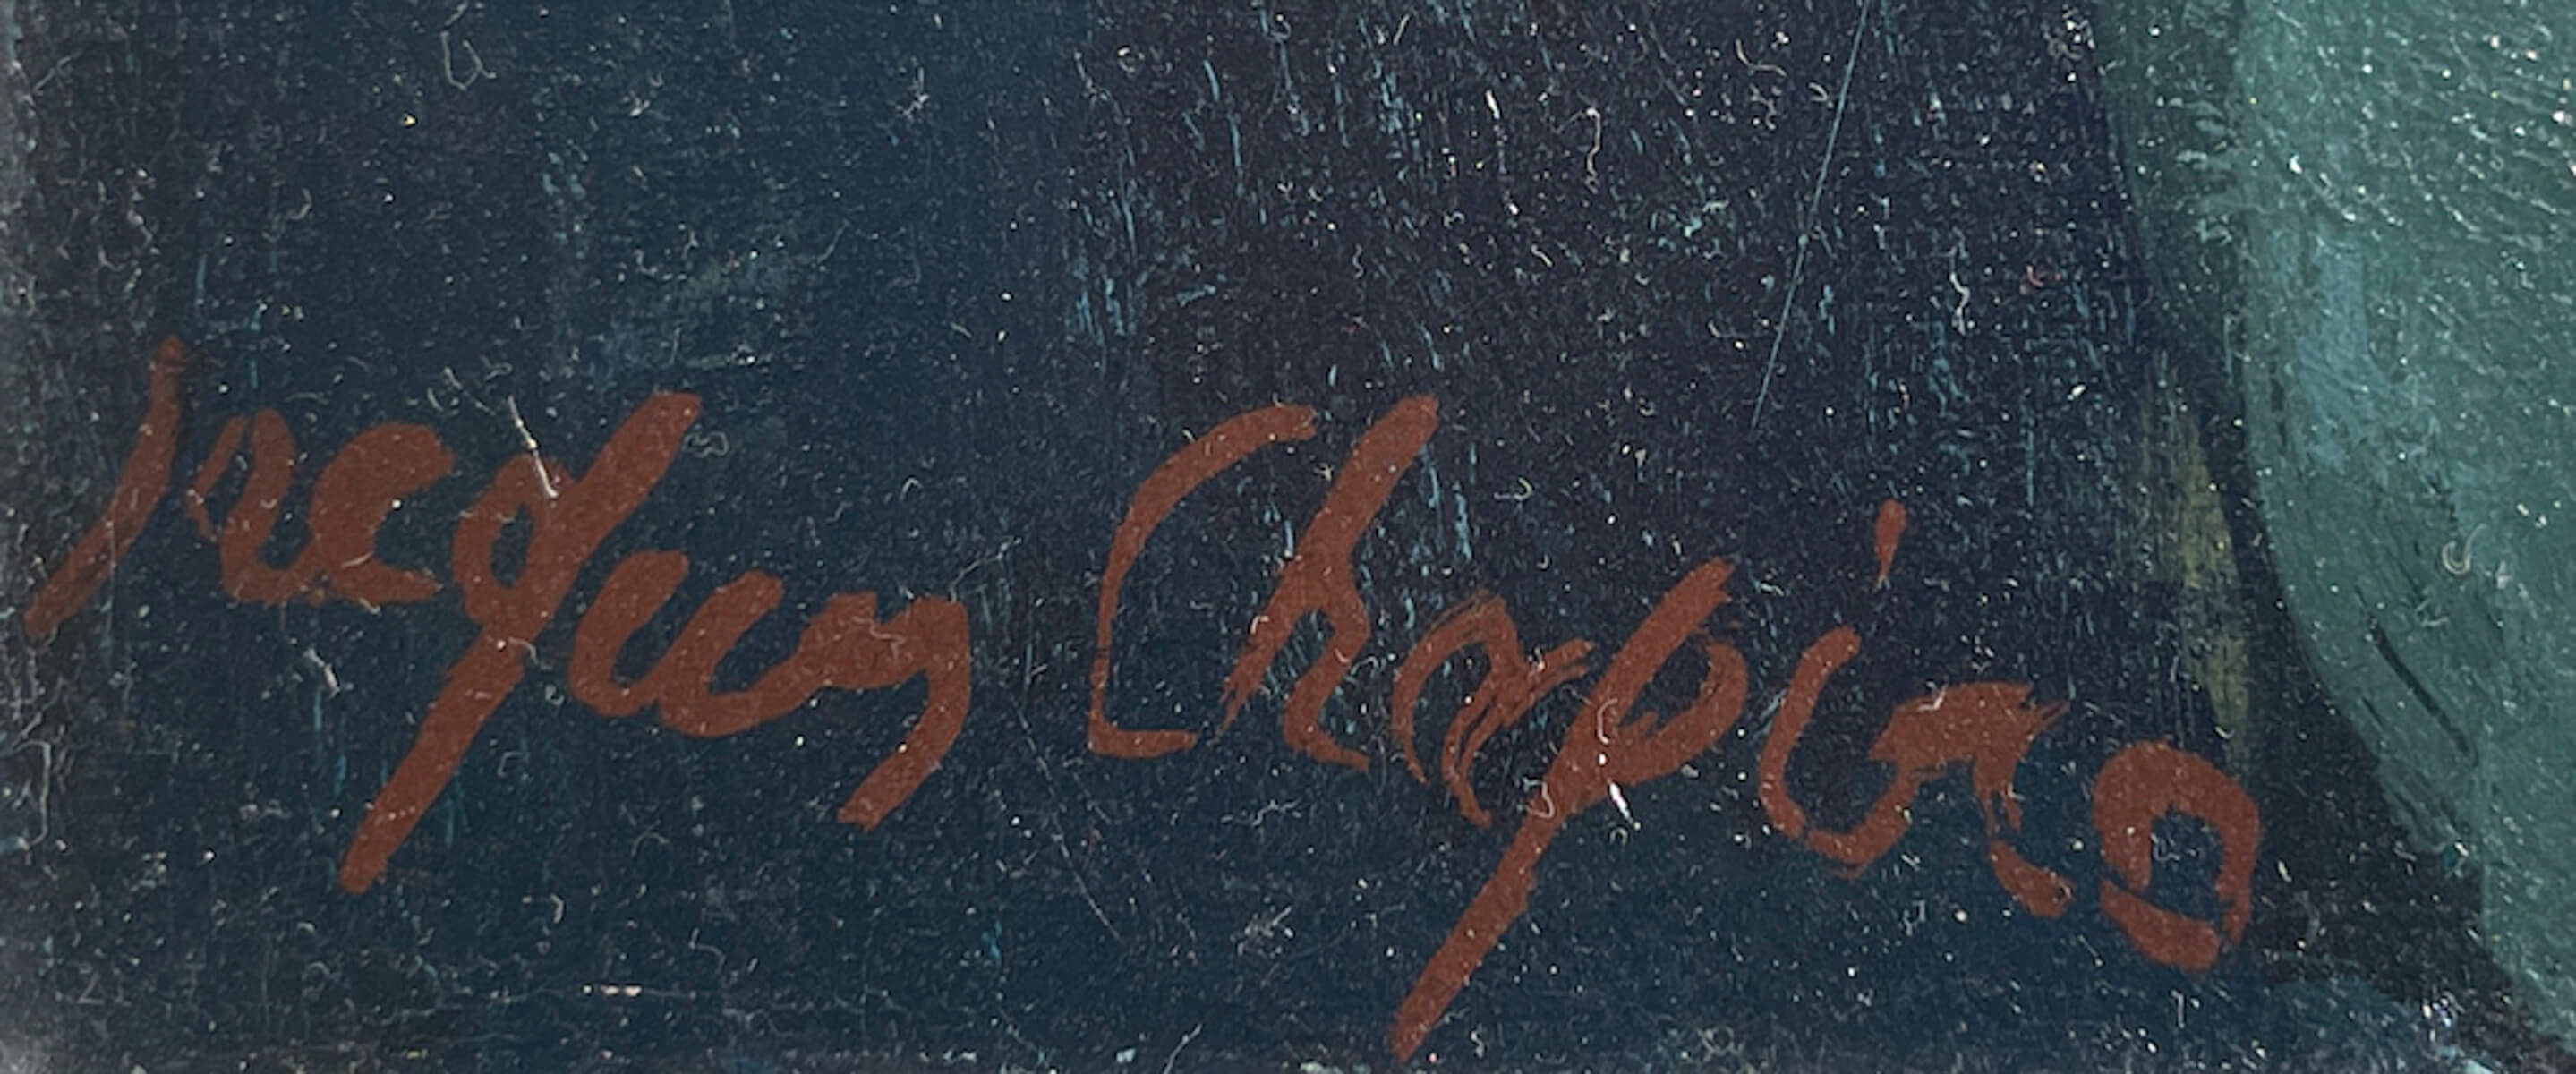 Jacques CHAPIRO (1887/97-1972) Russian - French